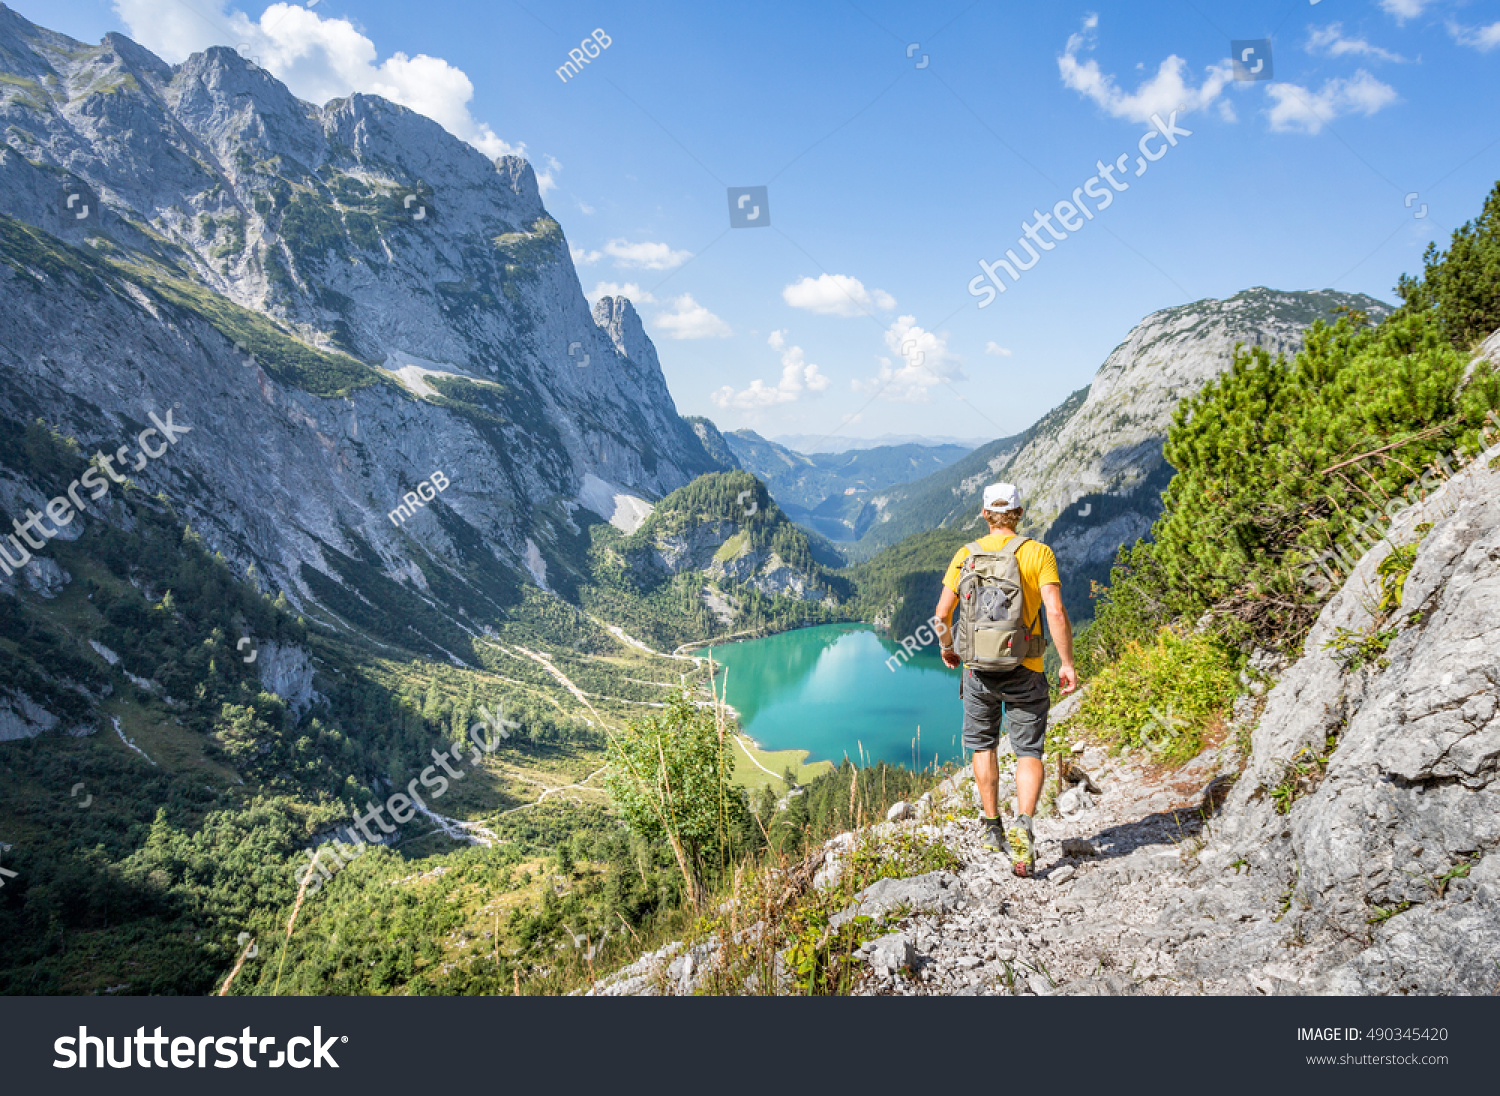 121,784 Austria hiking Images, Stock Photos & Vectors | Shutterstock